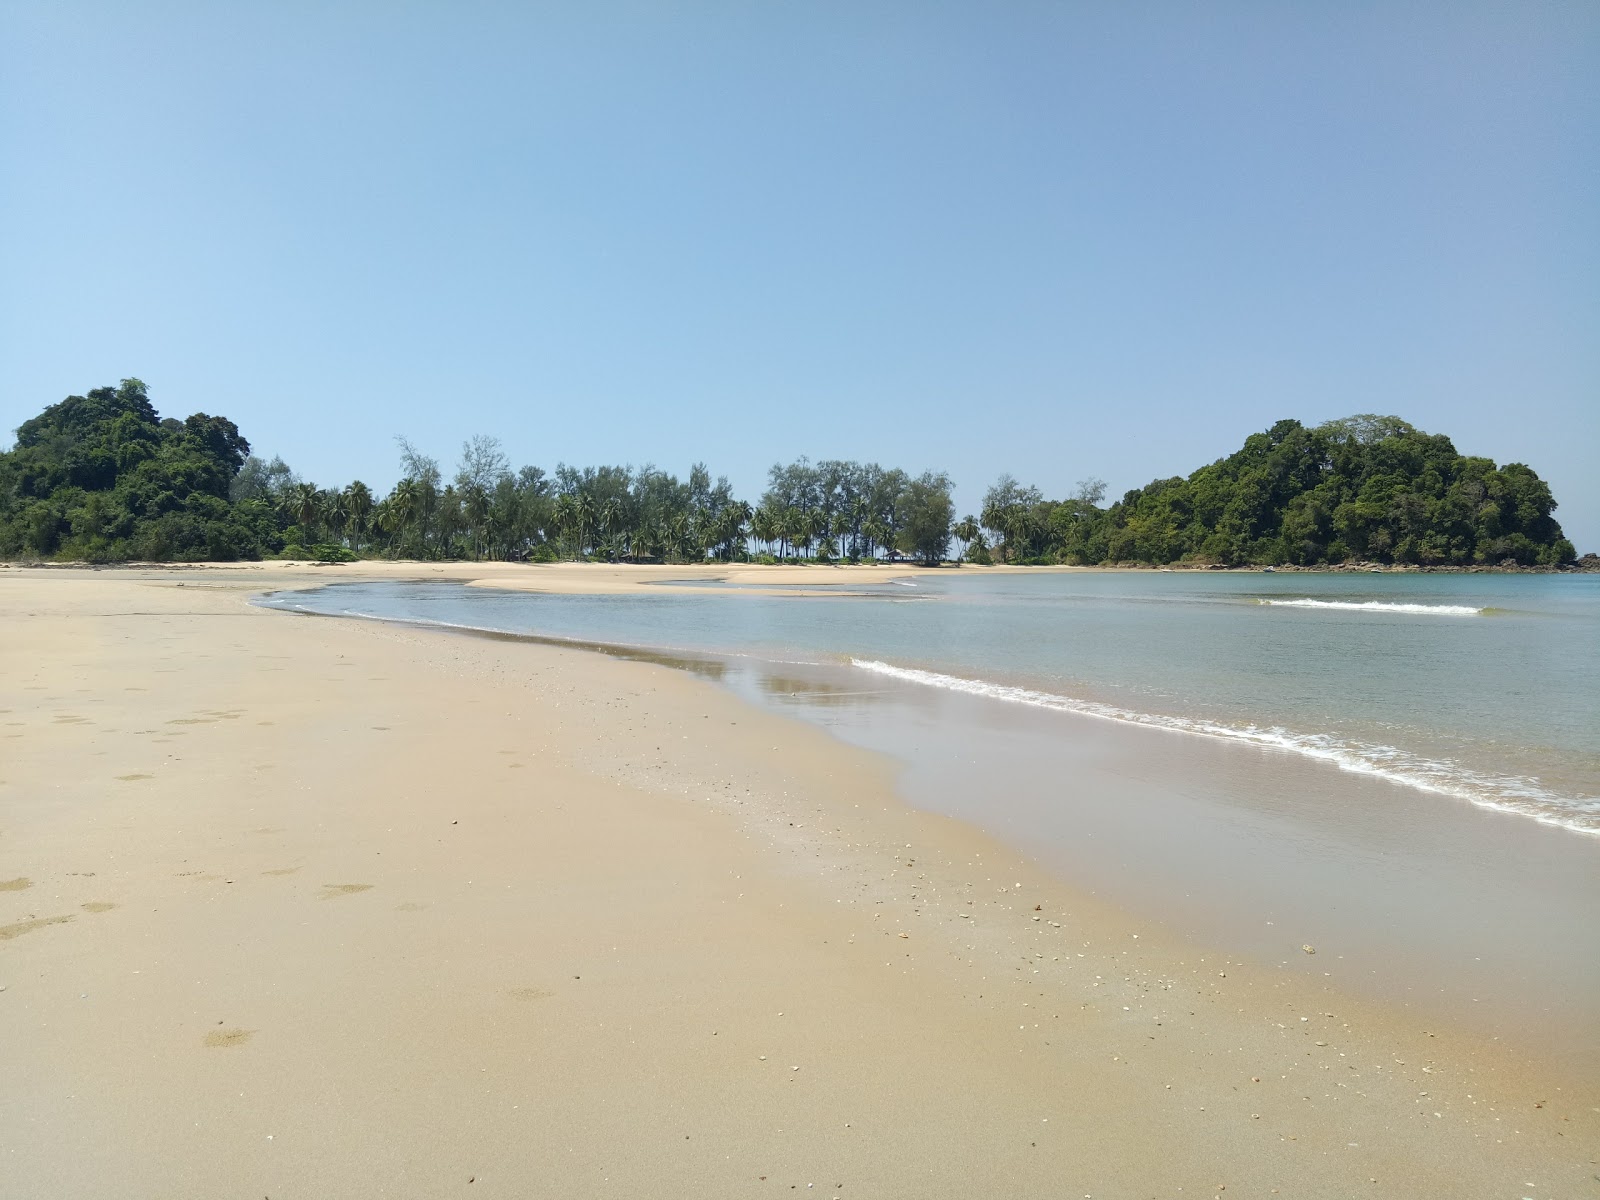 Fotografija Phrathong Beach nahaja se v naravnem okolju